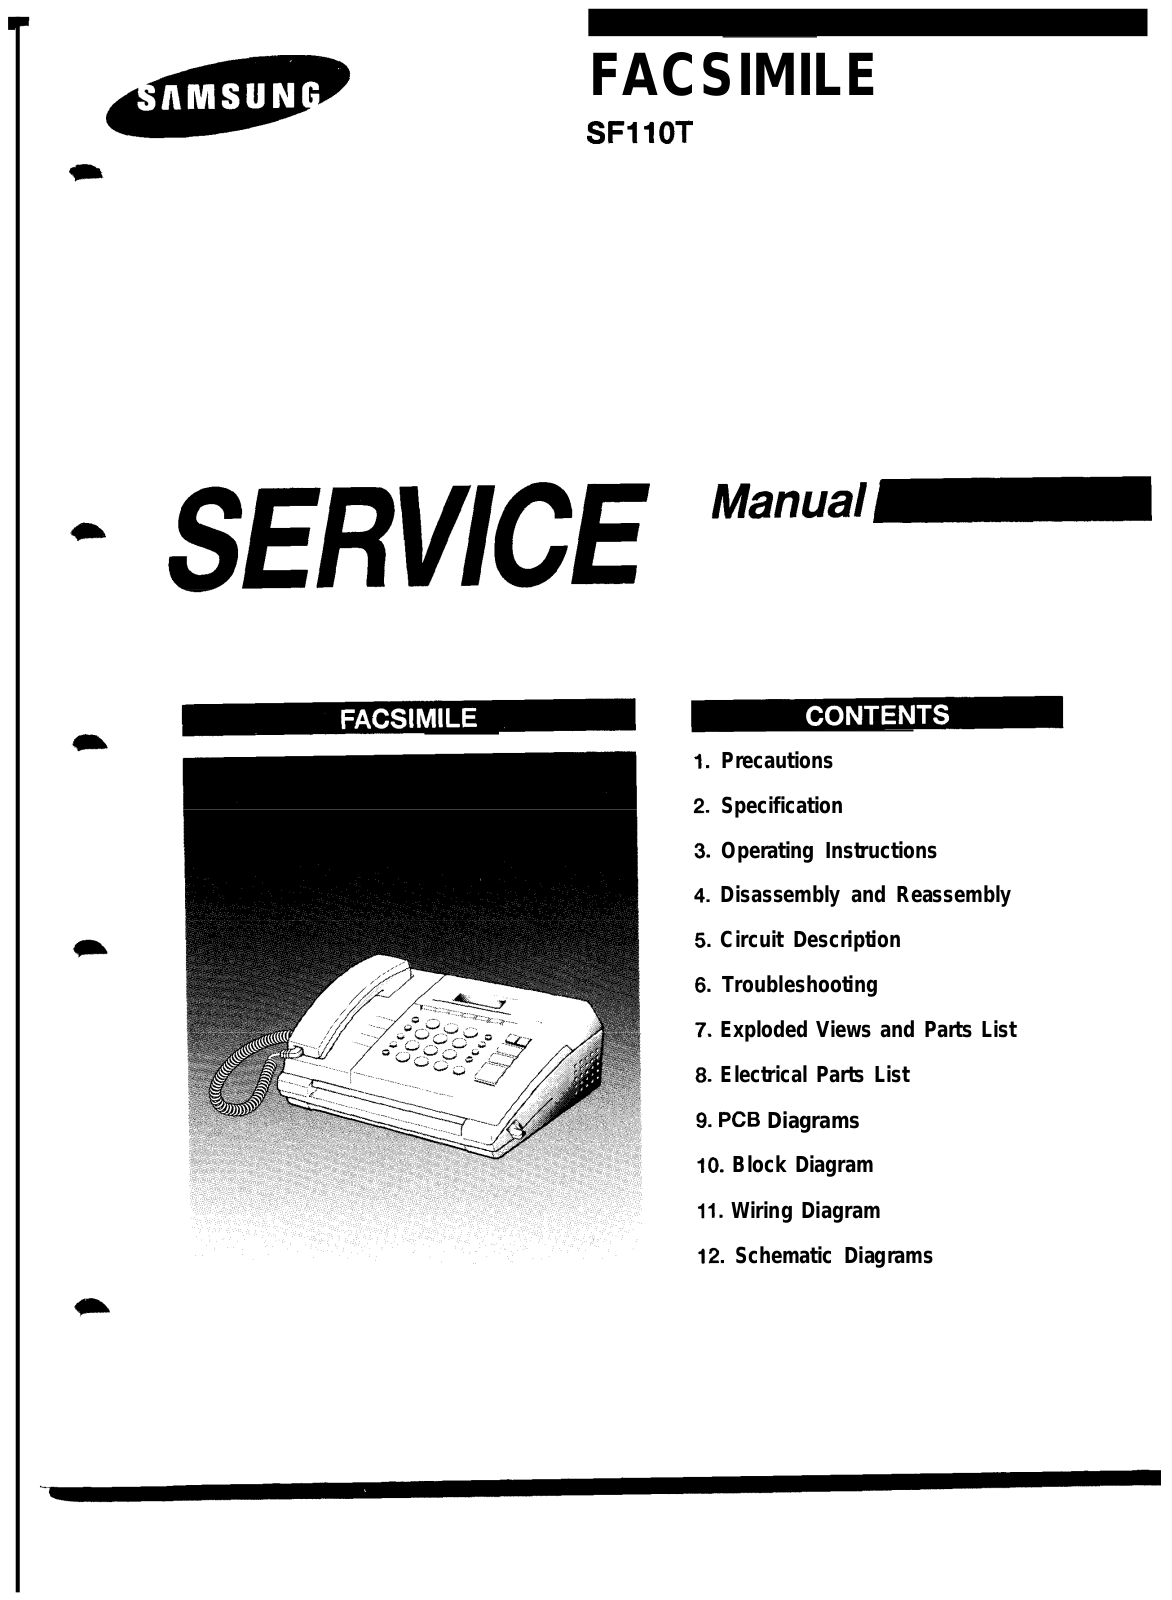 SAMSUNG FAXF110T Service Manual